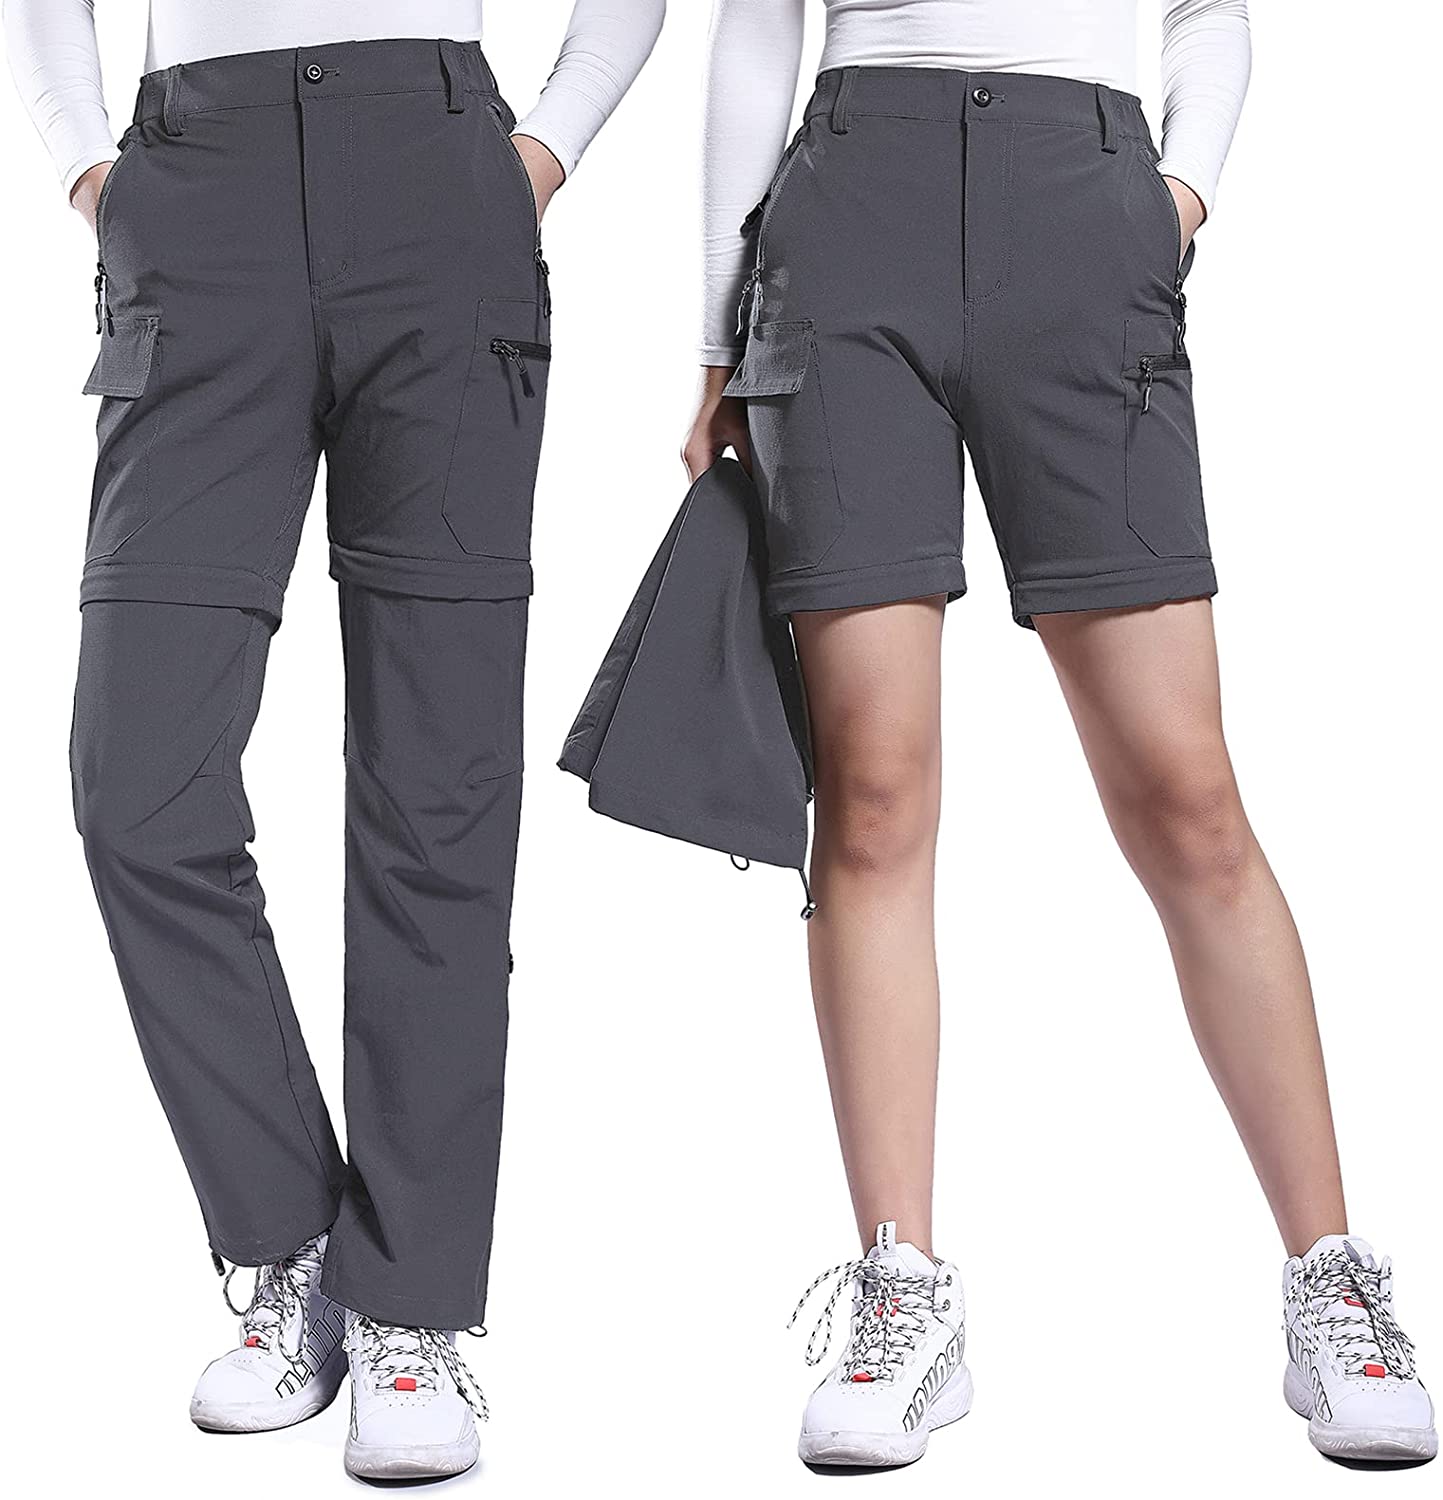  Womens Hiking Pants Convertible Quick Dry Scout Safari  Lightweight Outdoor UPF 50 Fishing Cargo Pants Capri Zipper Pockets